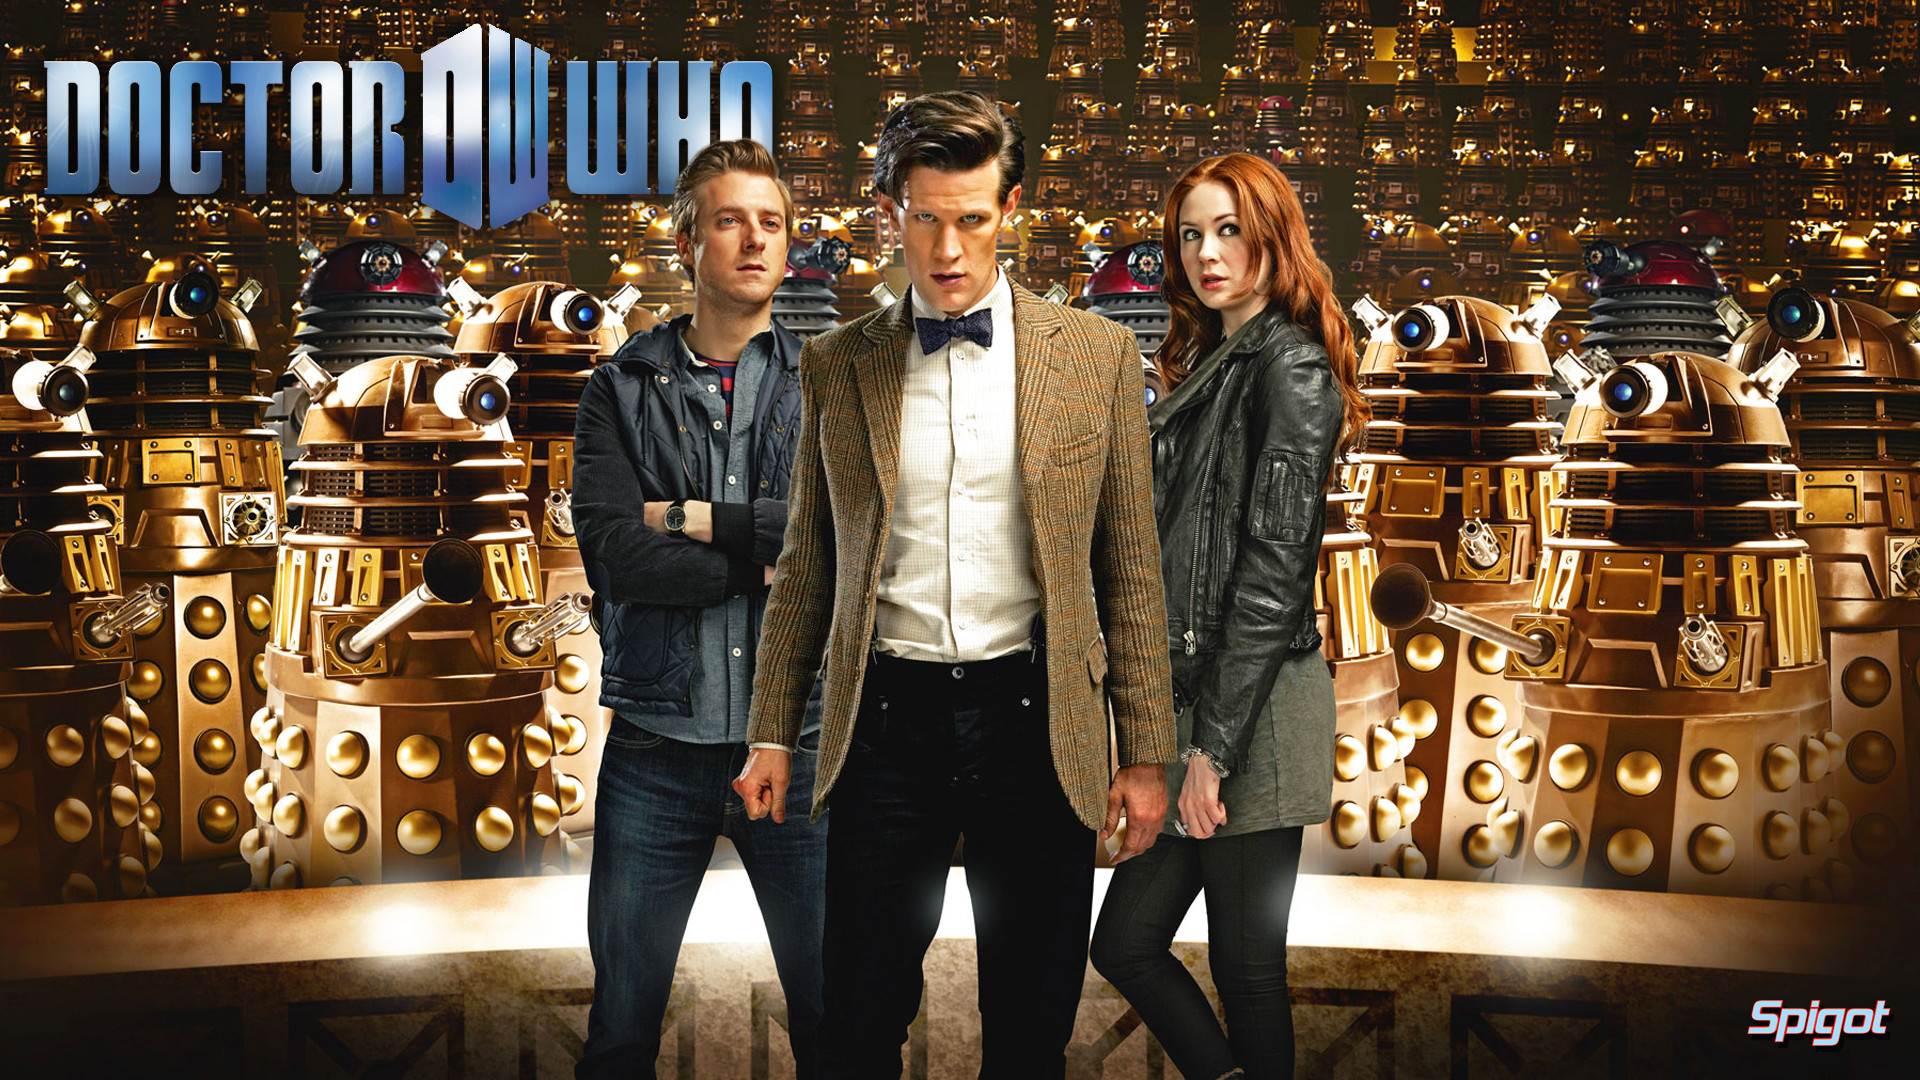 1920x1080 Doctor Who Season 7 Wallpapers